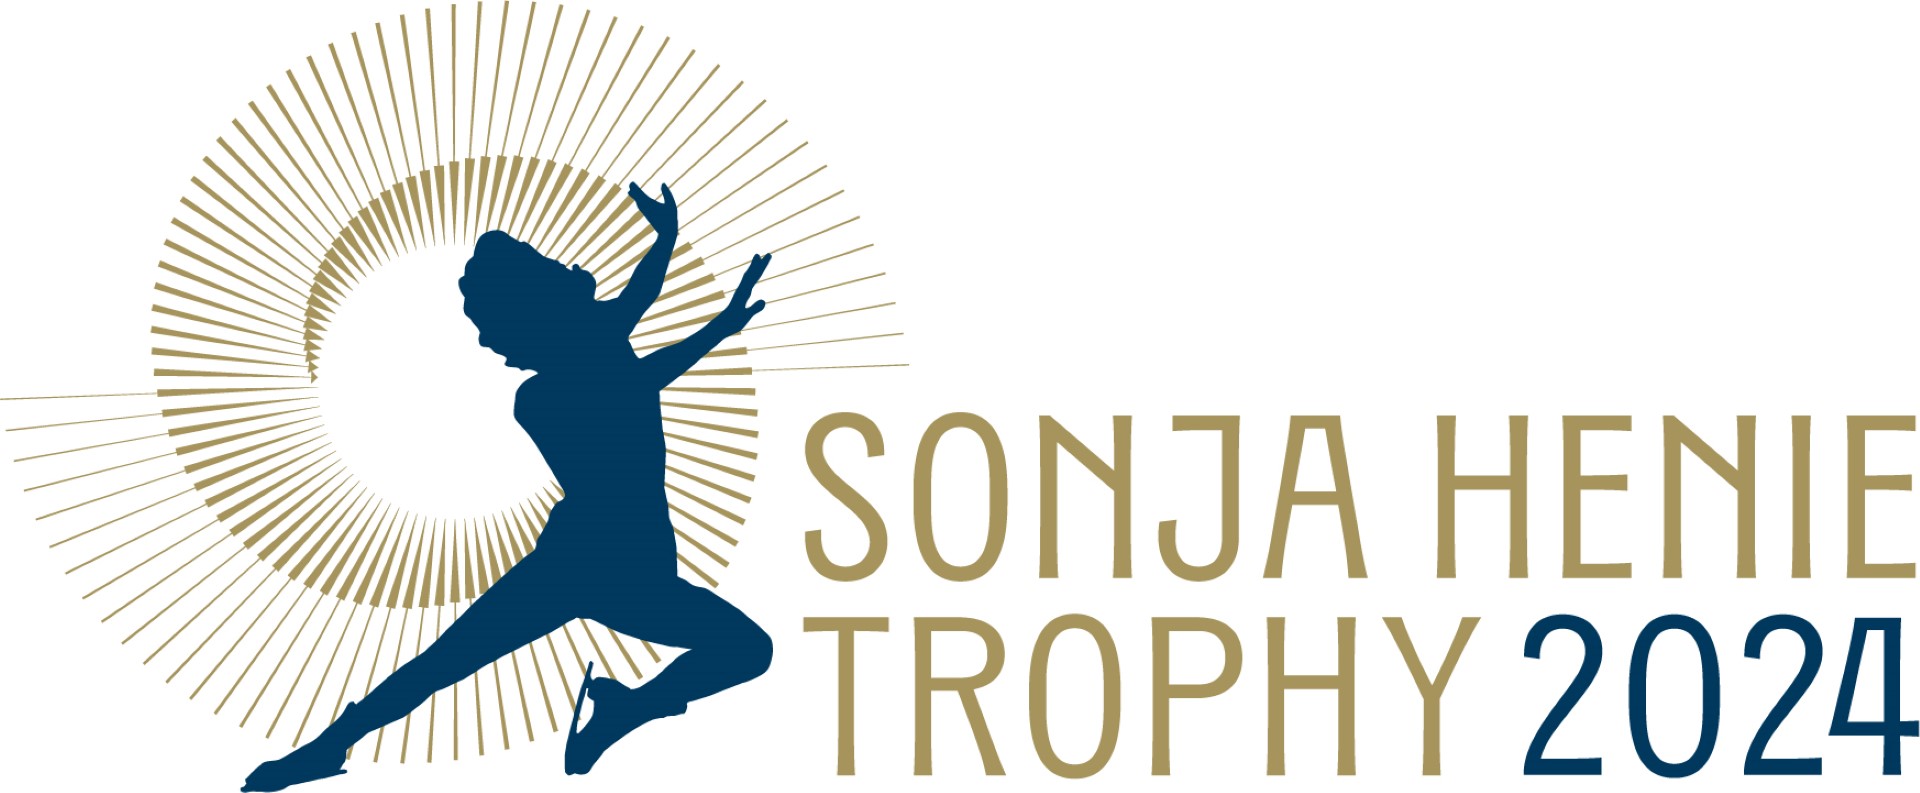 Sonja_hennie_trophy_logo_bredde_aarstall.jpg